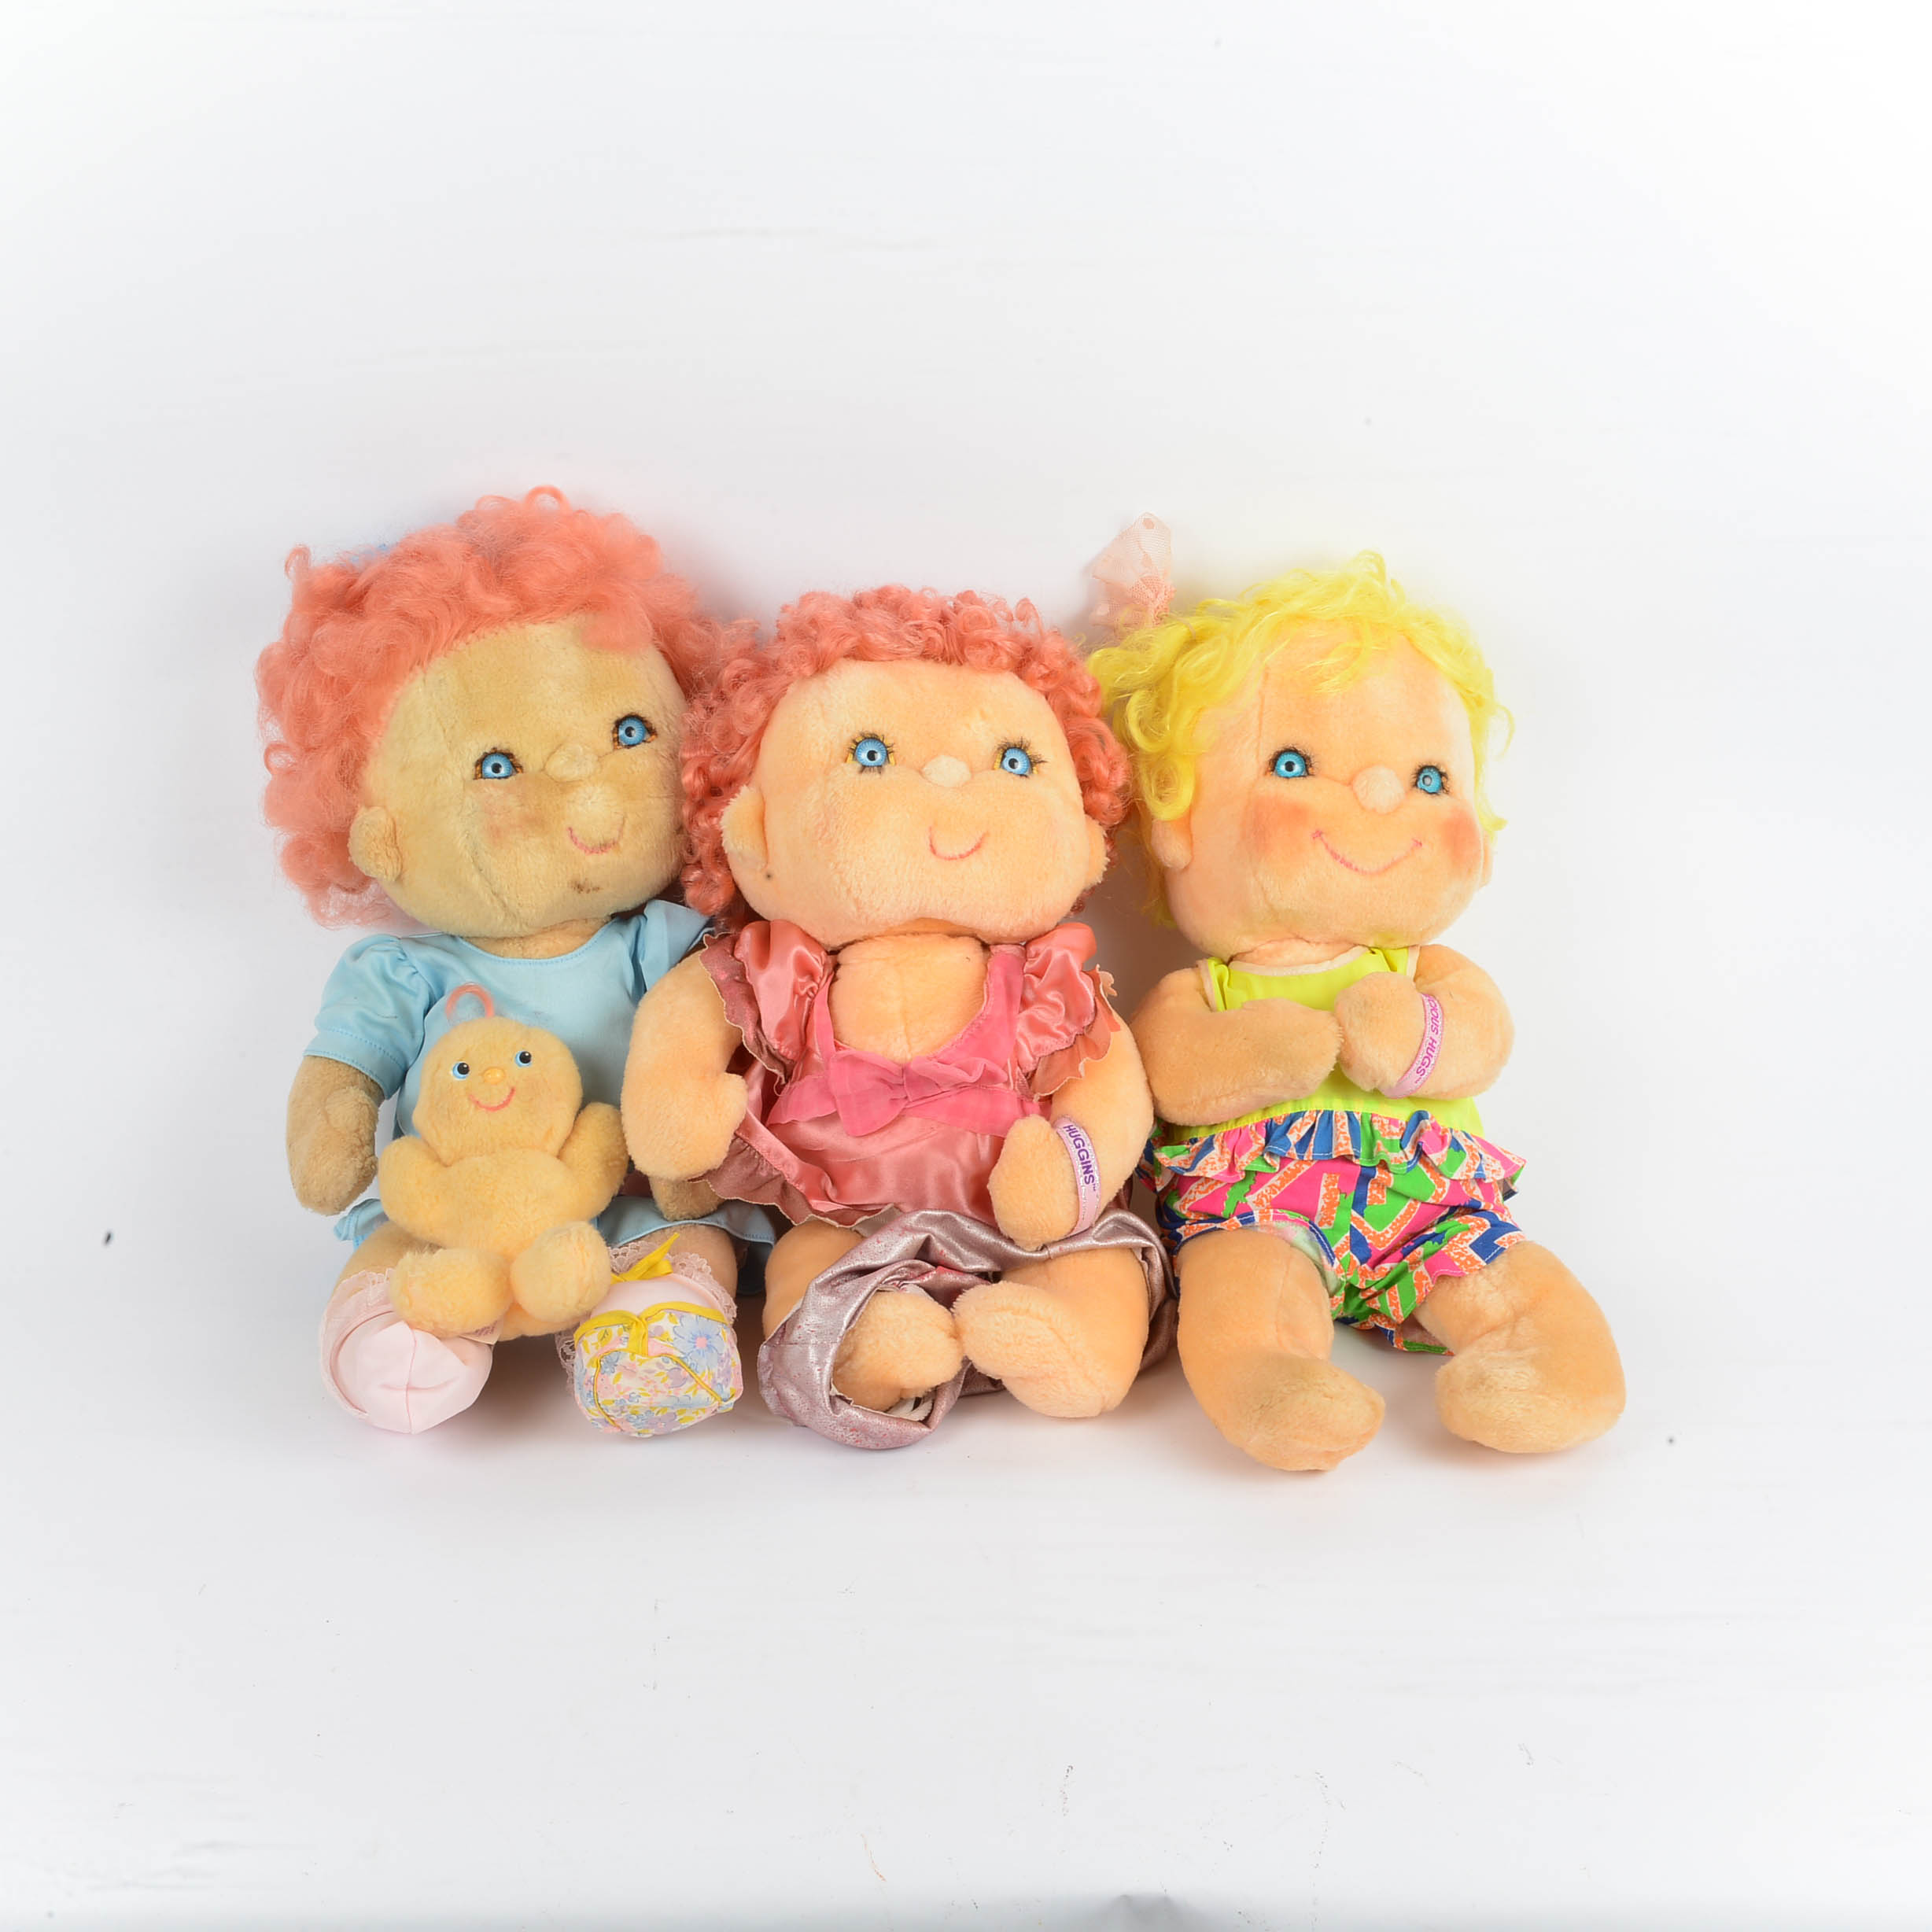 hugga bunch dolls for sale